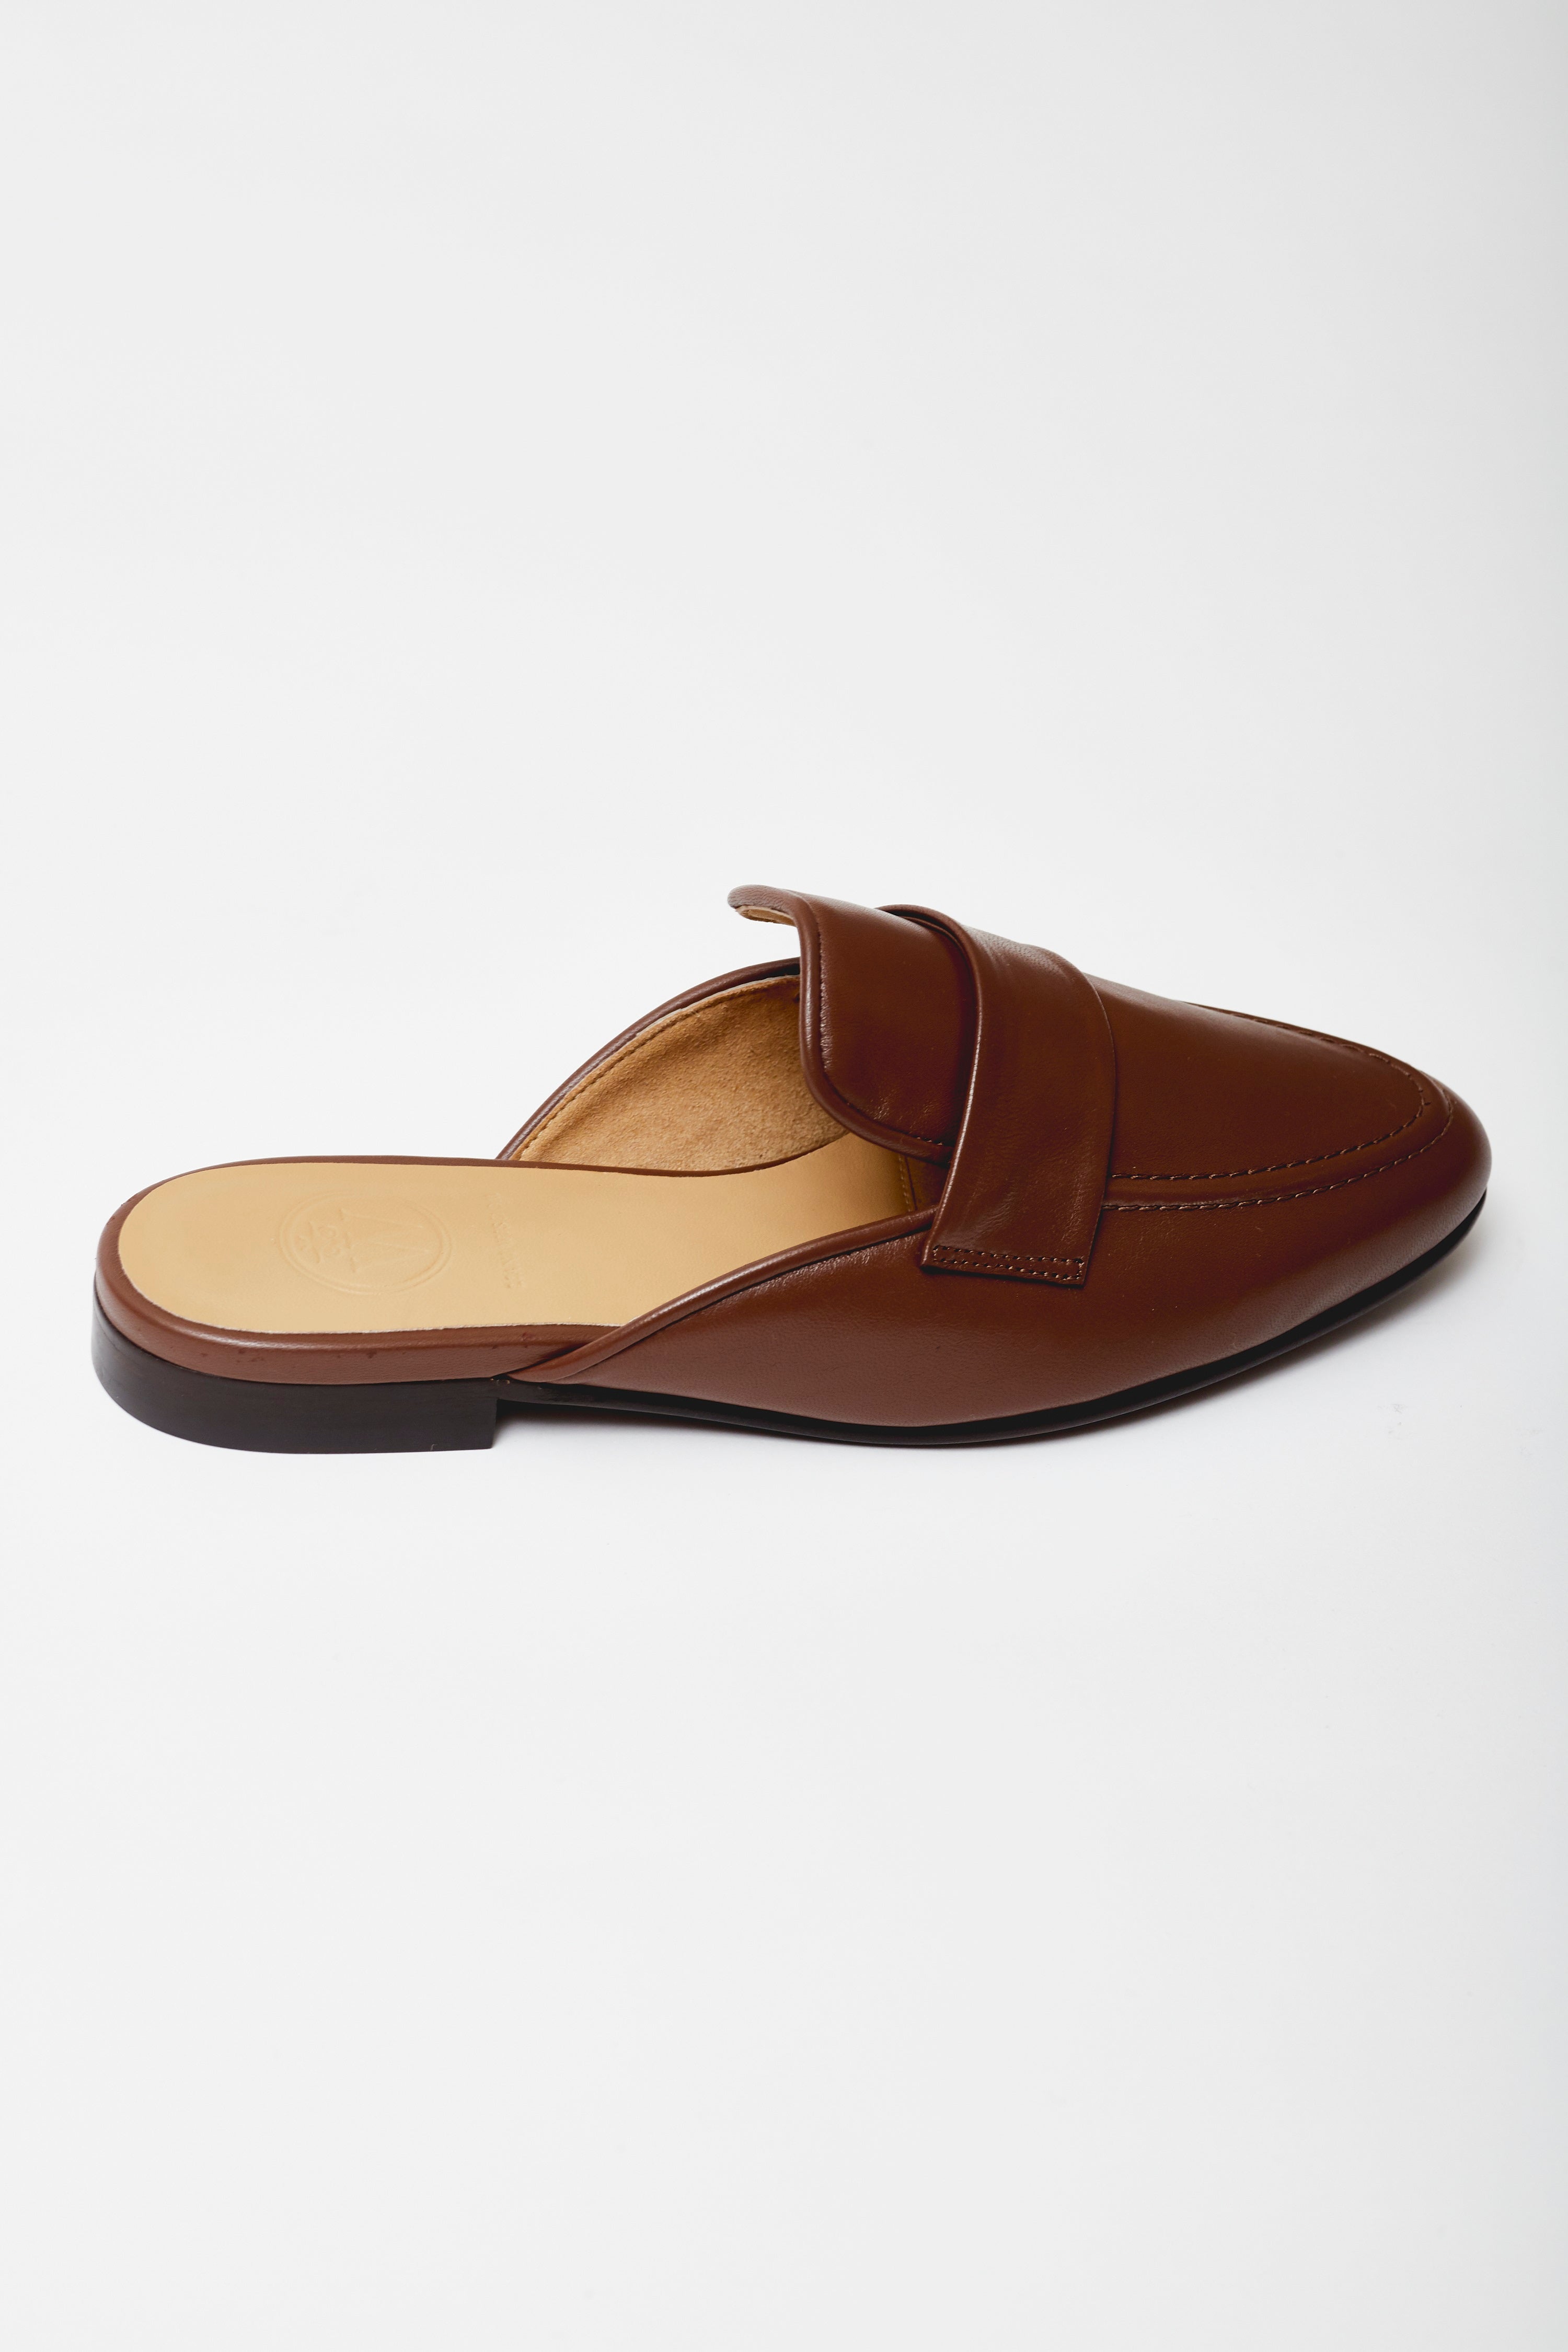 METRO Da Vinchi Loafers For Men  Buy 11 Black Color METRO Da Vinchi  Loafers For Men Online at Best Price  Shop Online for Footwears in India   Flipkartcom